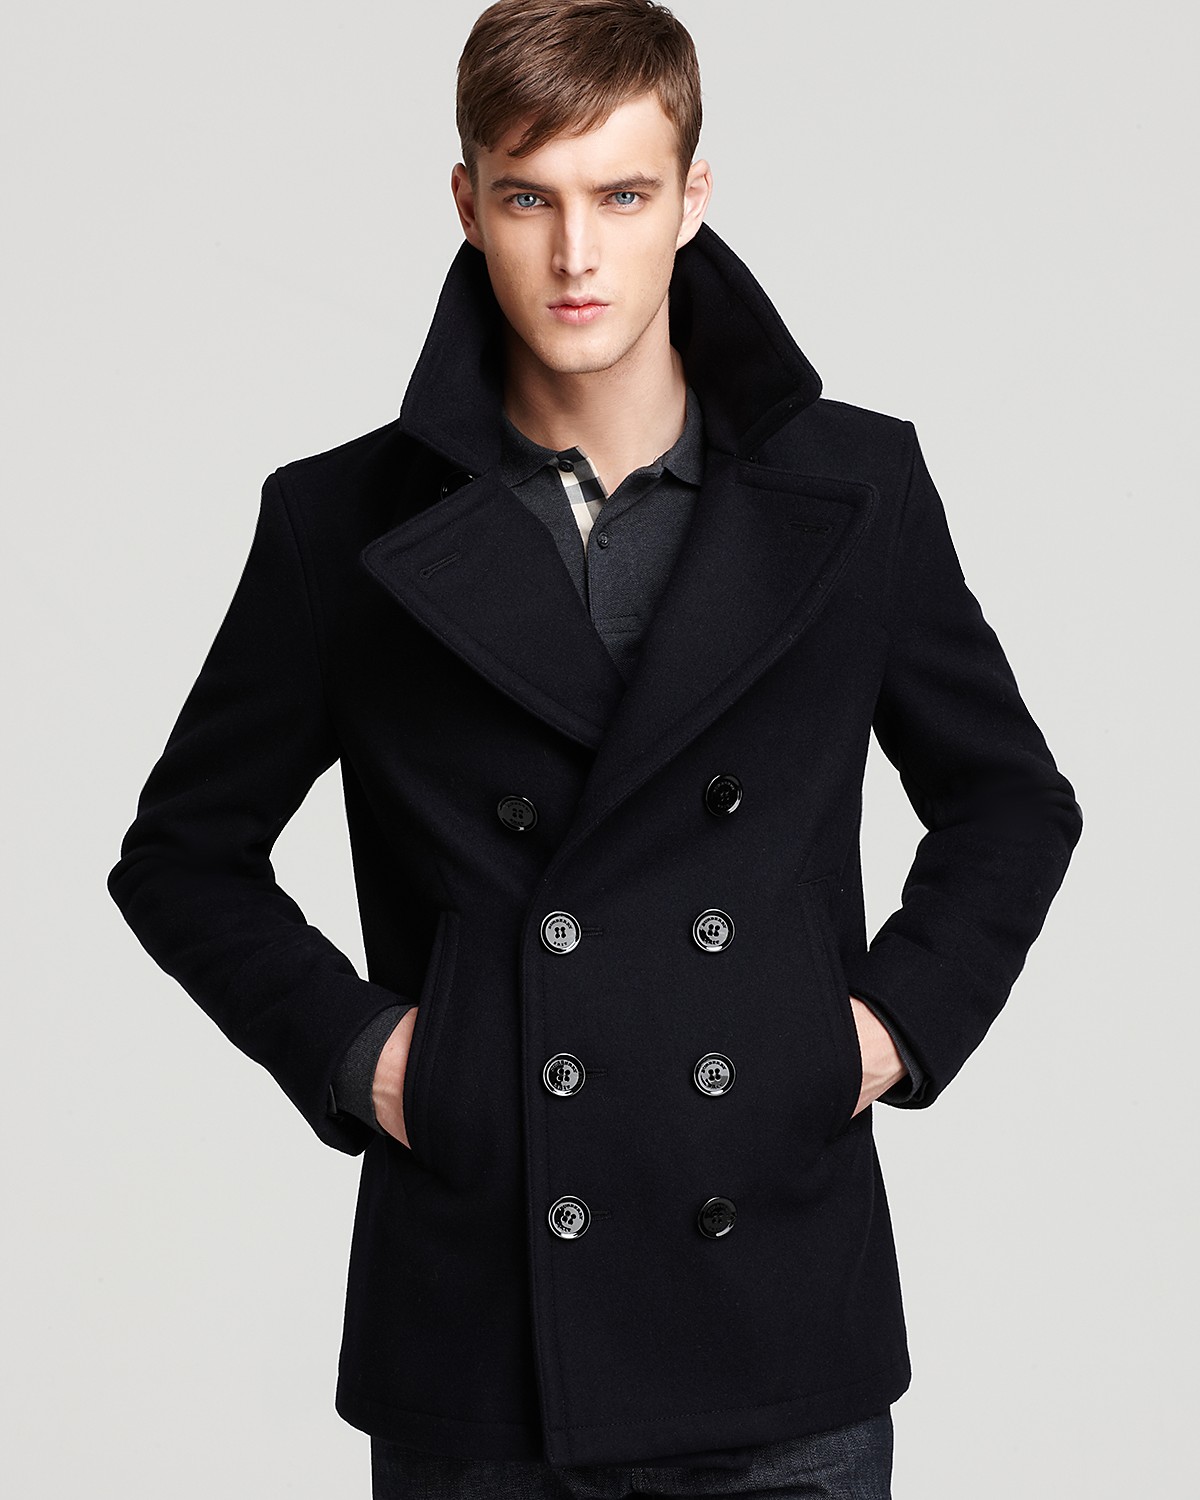 Зеленое мужское пальто. Пальто Барбери черное мужское. Burberry Peacoat man. Burberry Brit Peacoat. Burberry Brit пальто мужское.